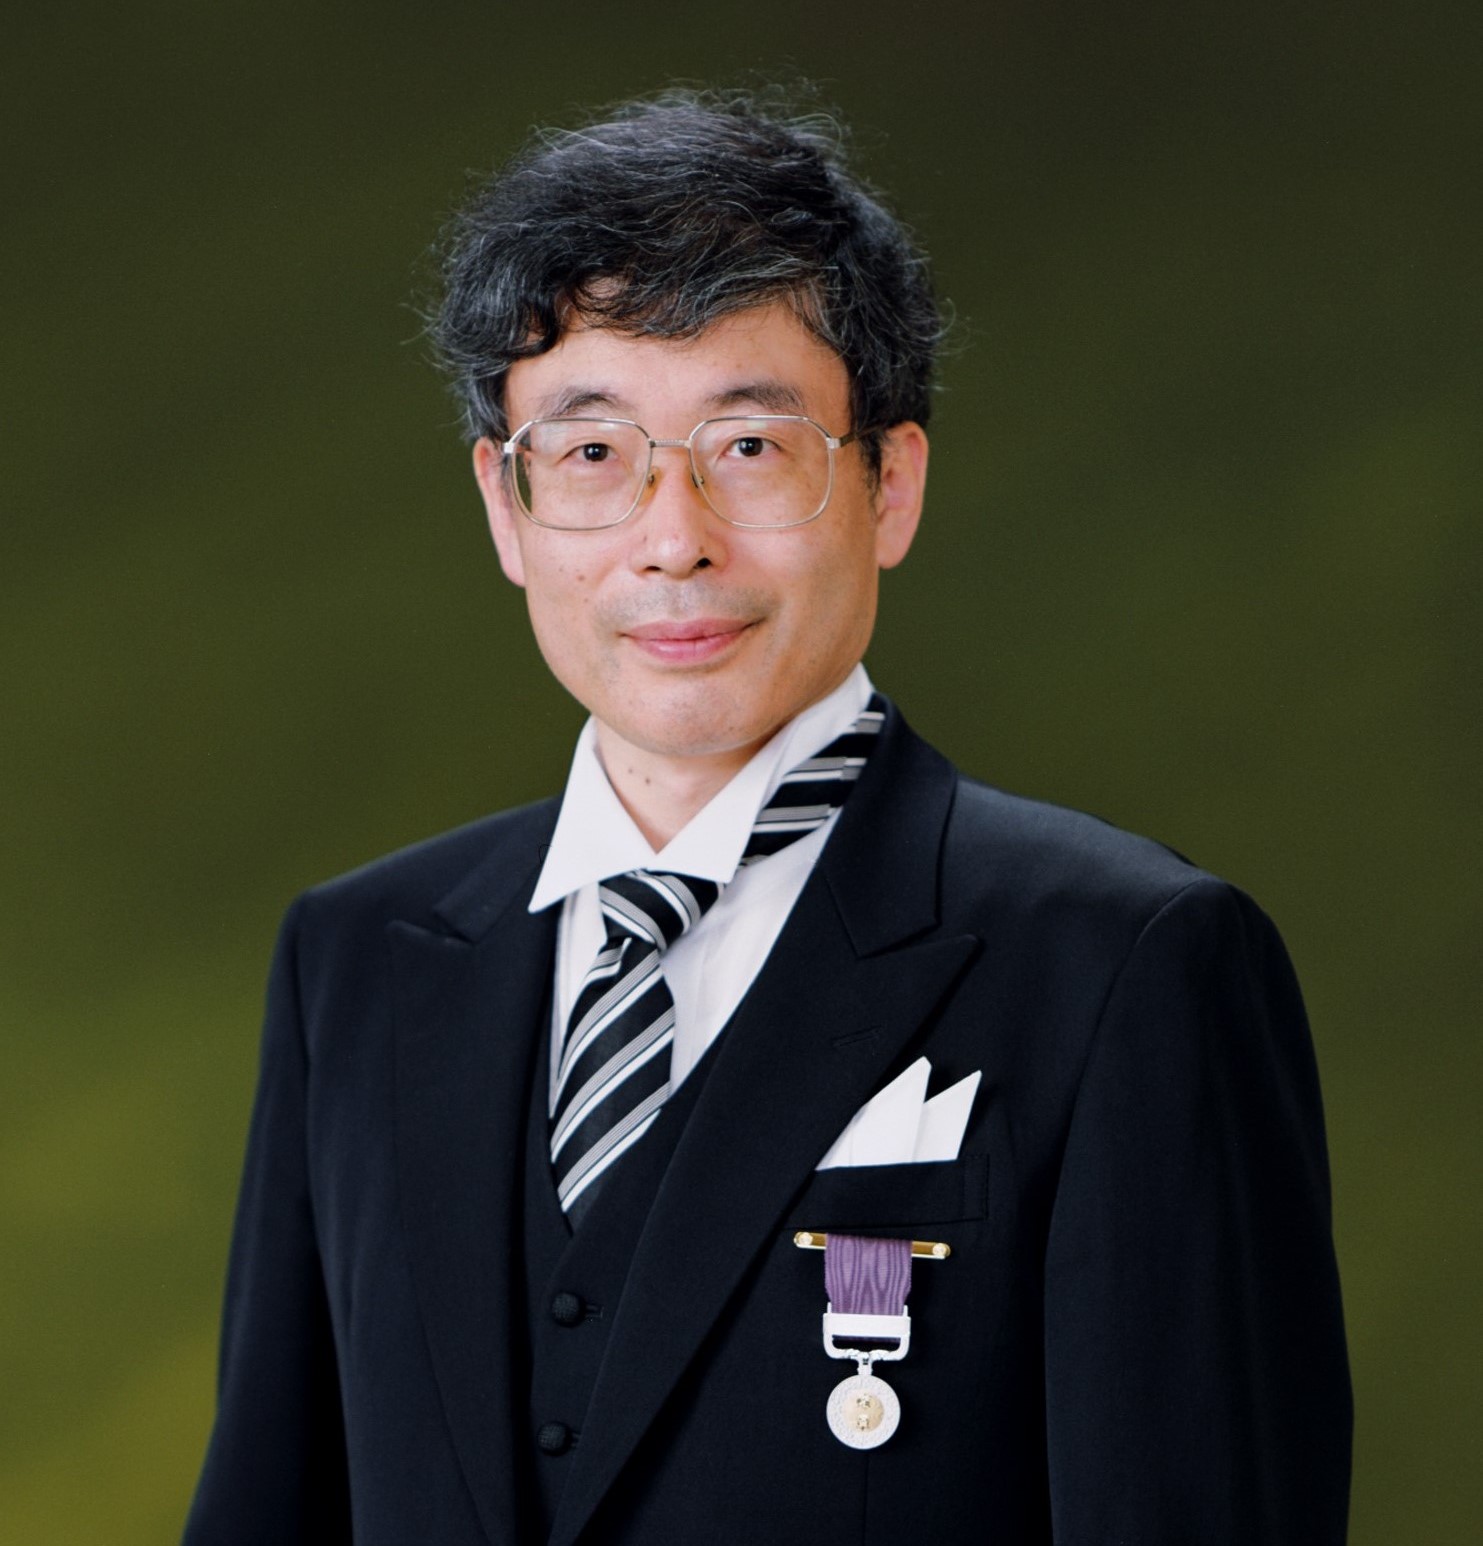 June 10, 2022, Professor Toshiyuki Kobayashi, Graduate School of Mathematical Sciences, received Doctorat Honoris Causa (Emeritus Professor) from the University of Reims, France.